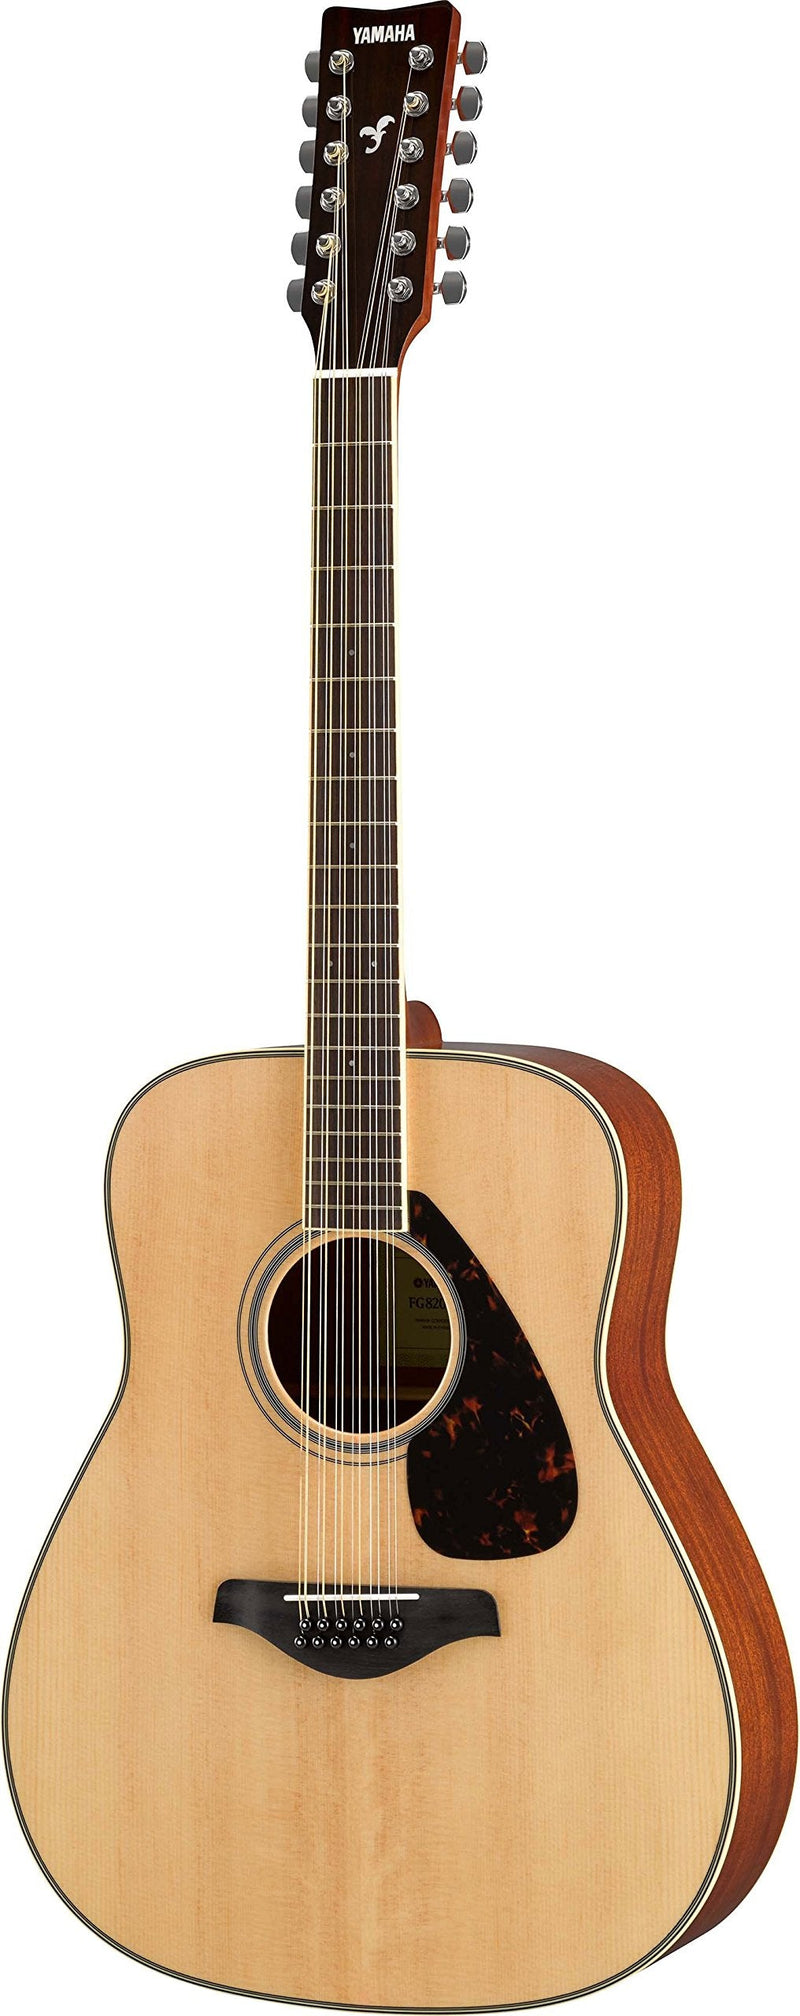 Yamaha FG820-12 Acoustic Guitar Spokane sale Hoffman Music 889025103749